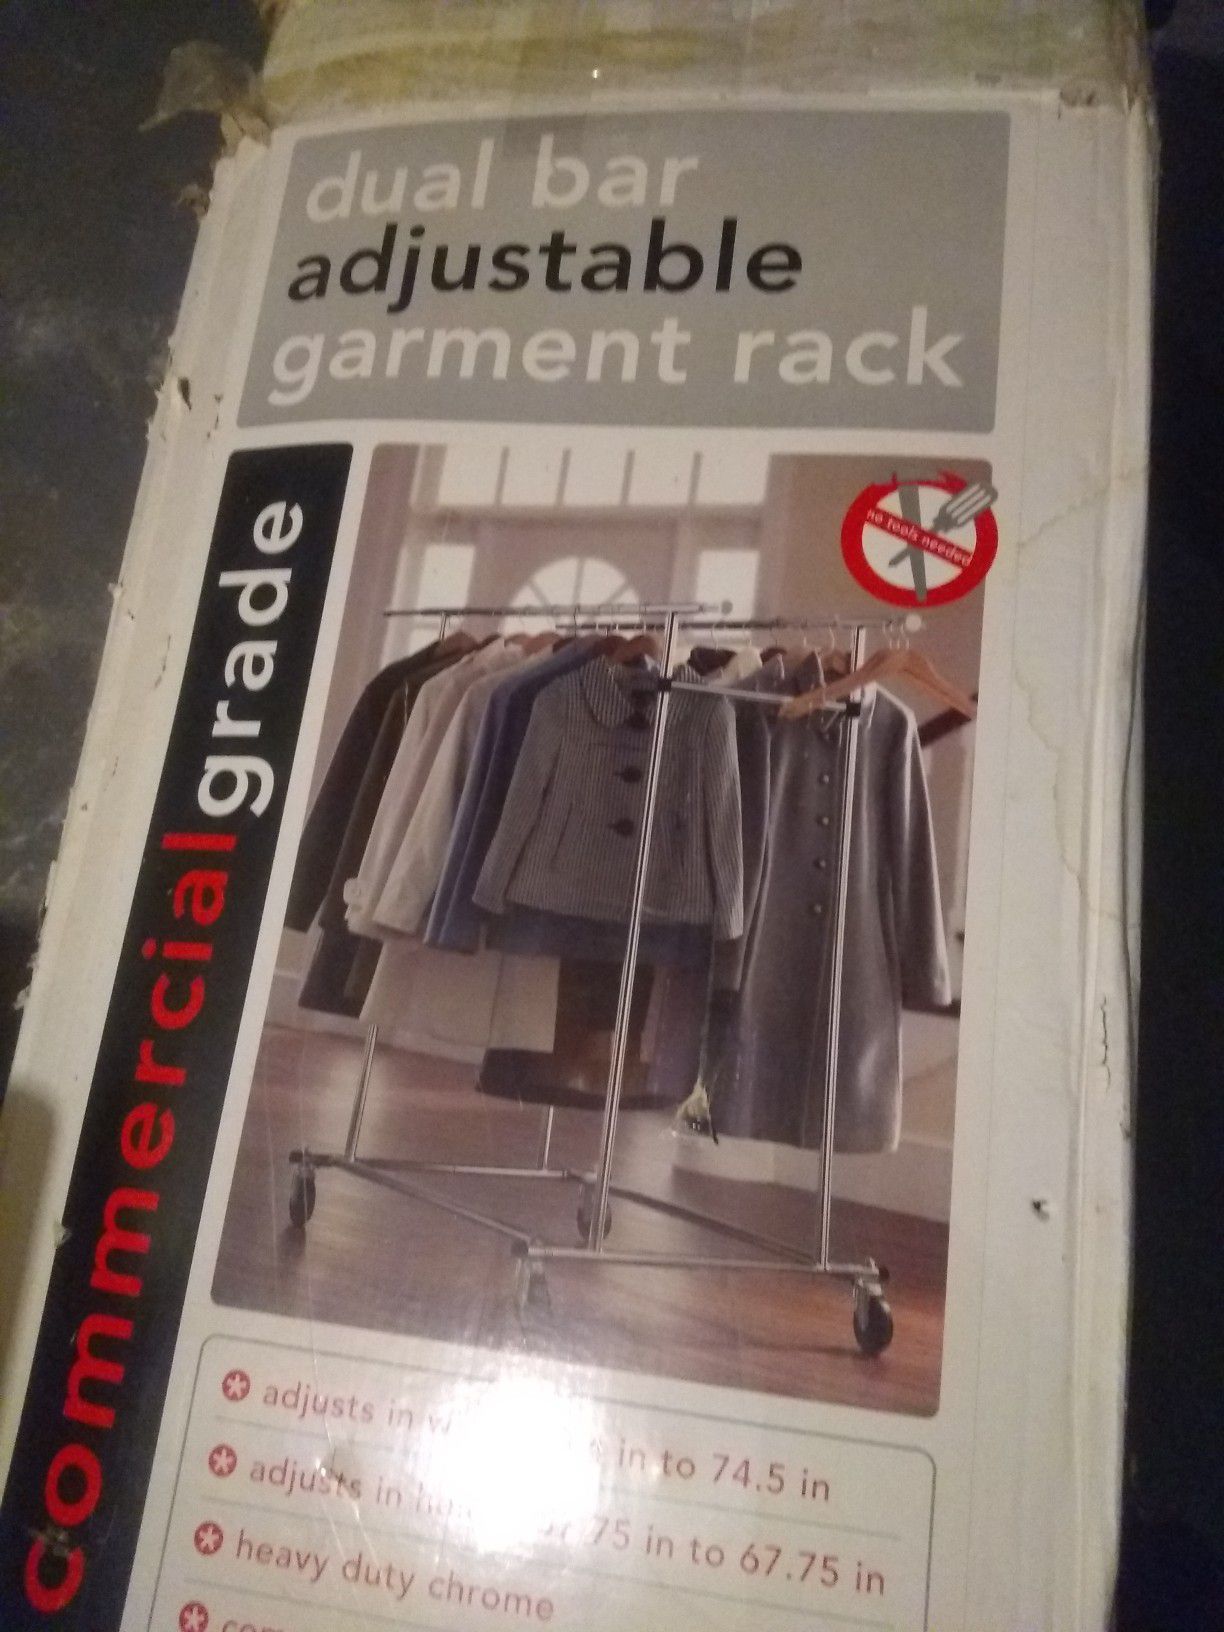 Dual bar adjustable garment rack